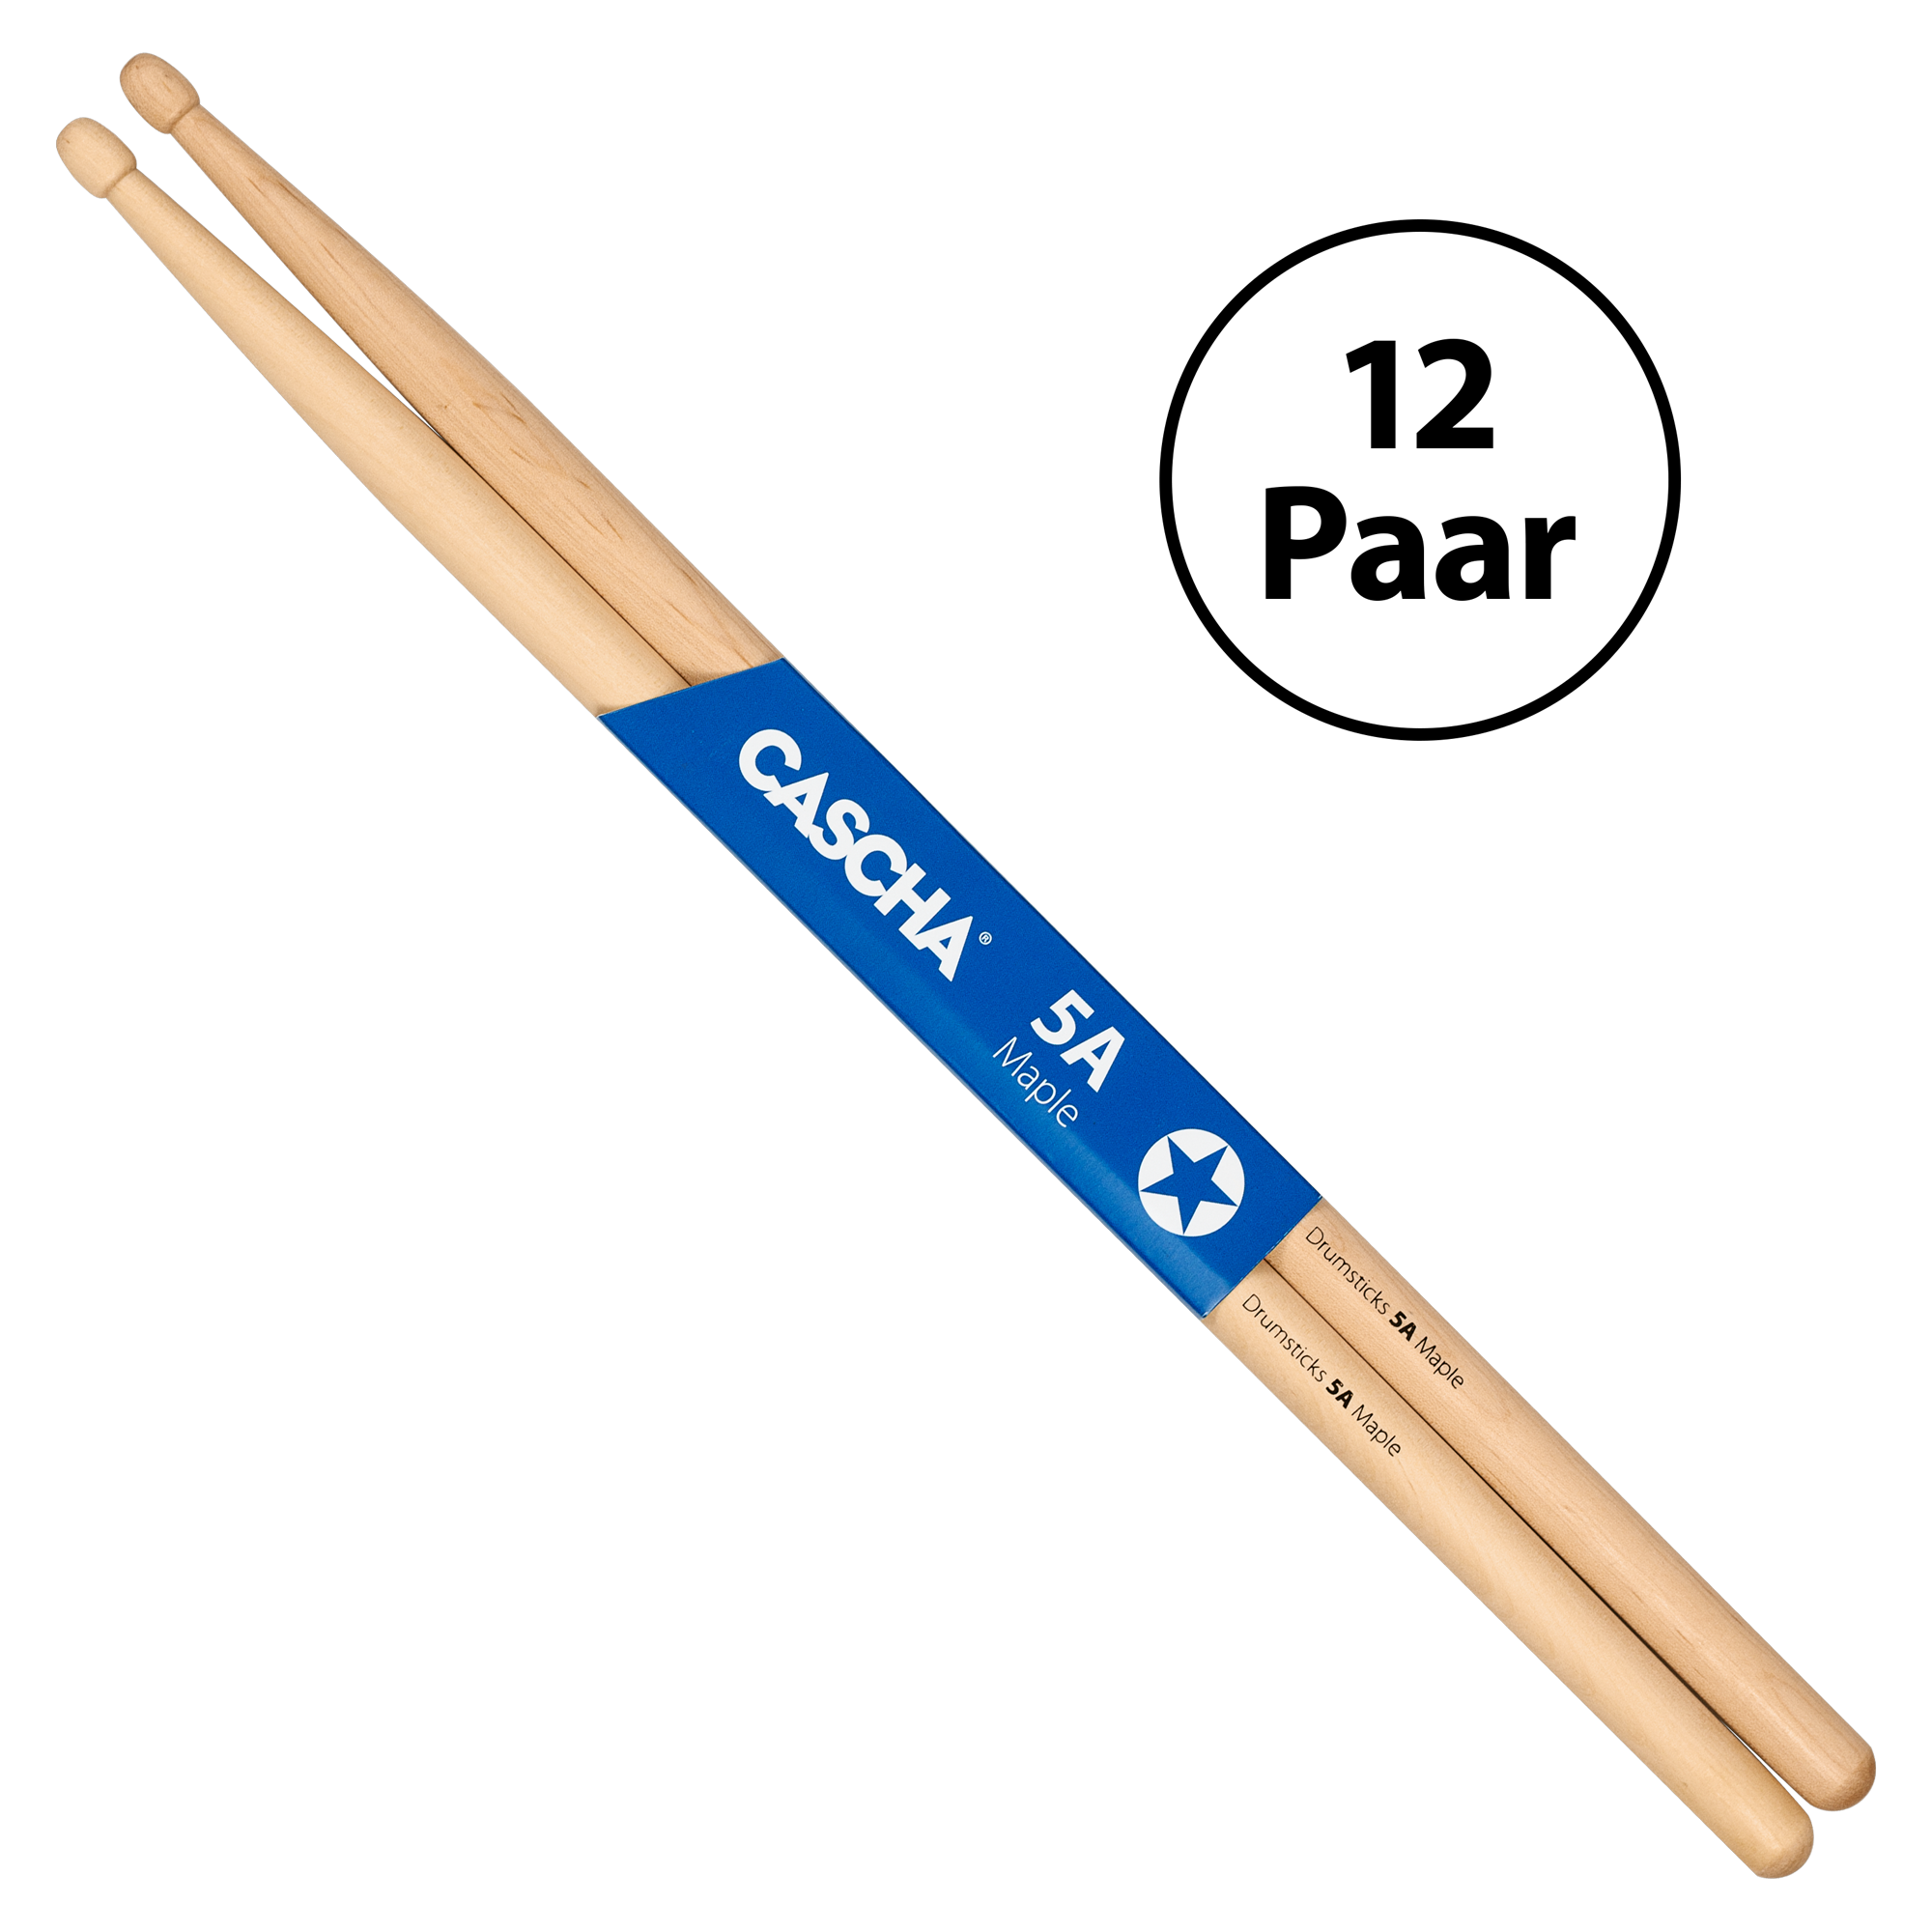 Drumsticks 5A Maple (12 Paar)